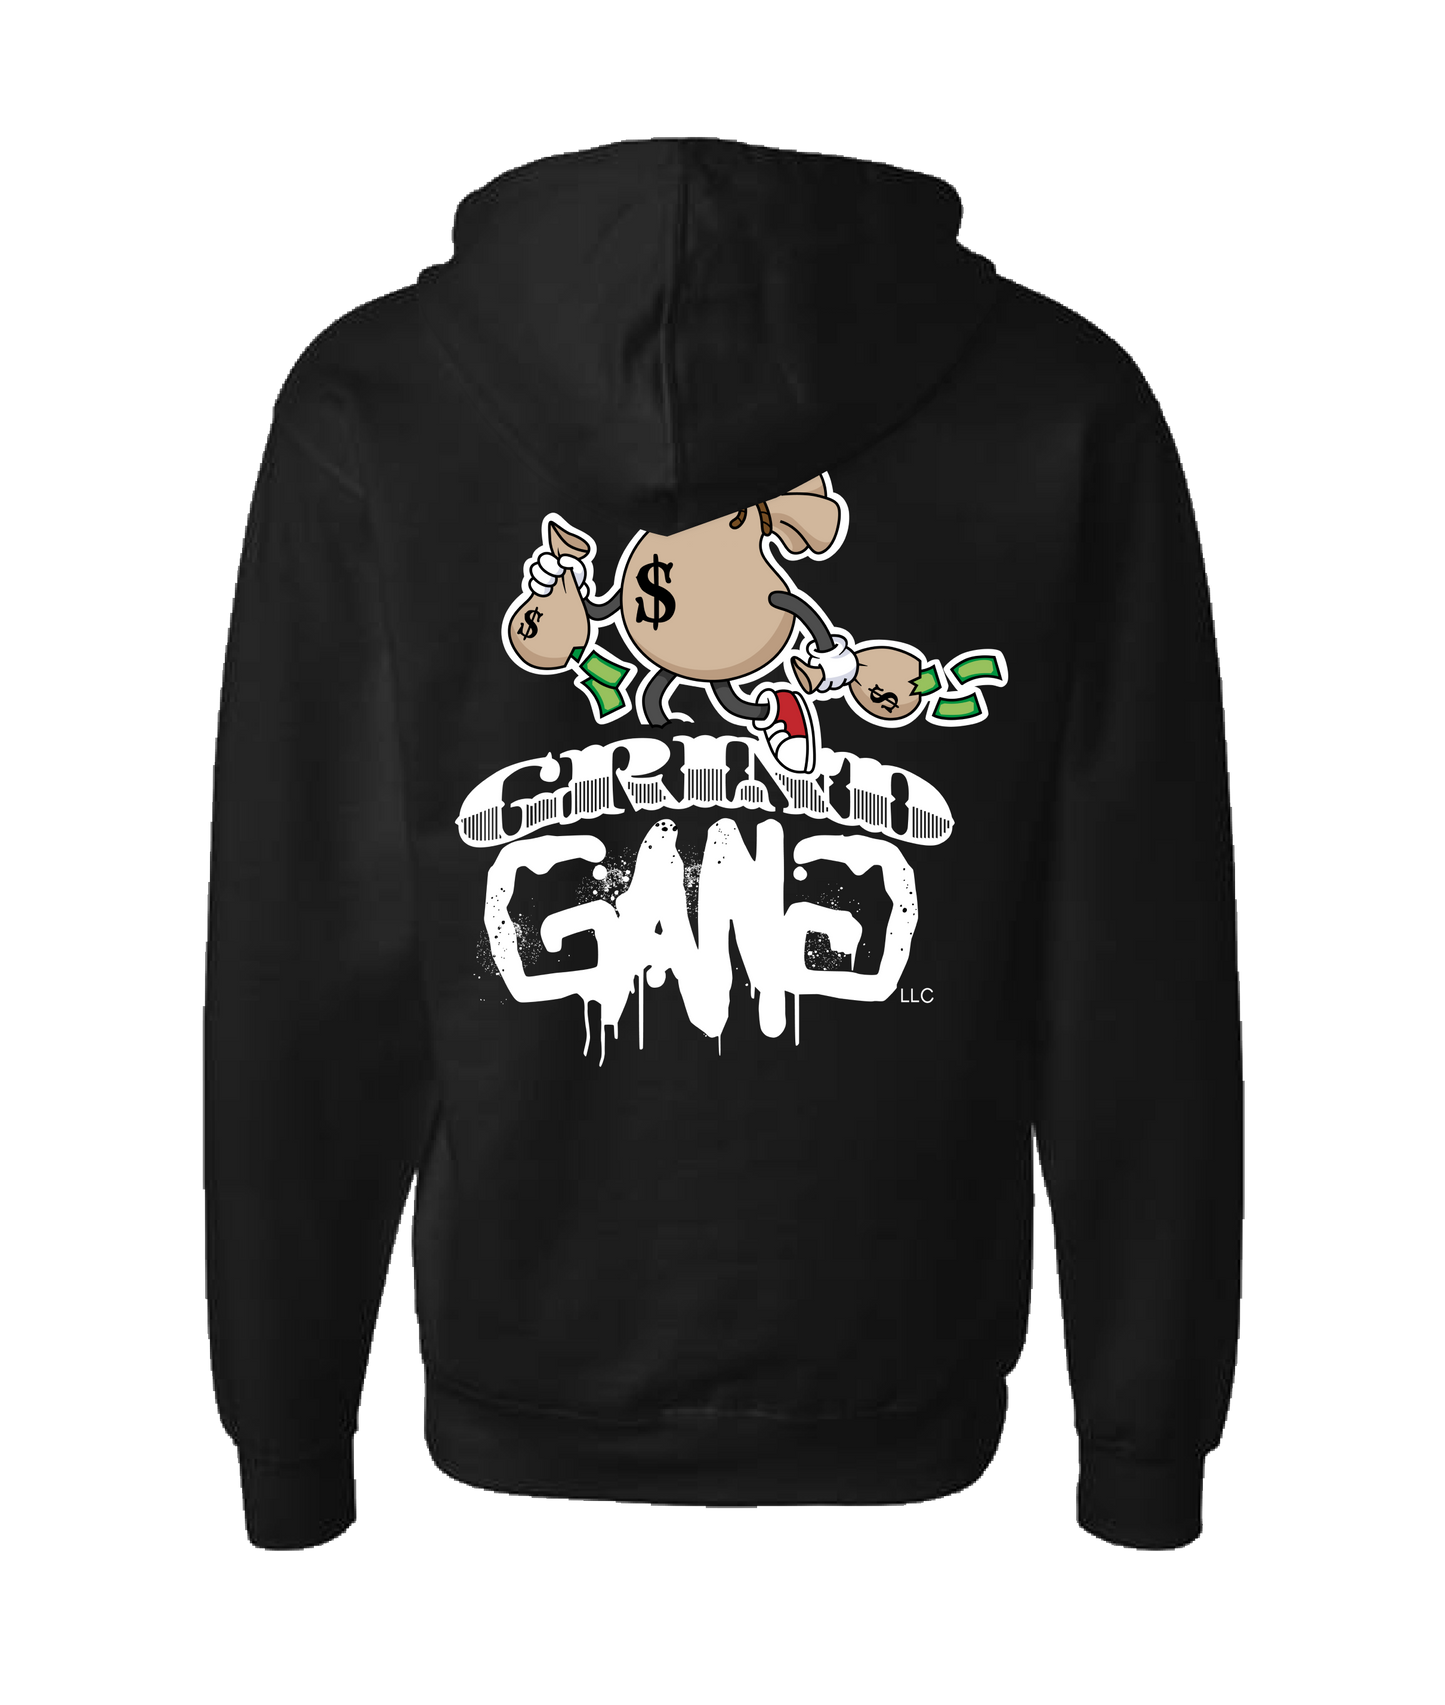 GRIND GANG ENT. LLC - MONEY BAG LOGO 1 - Black Zip Up Hoodie